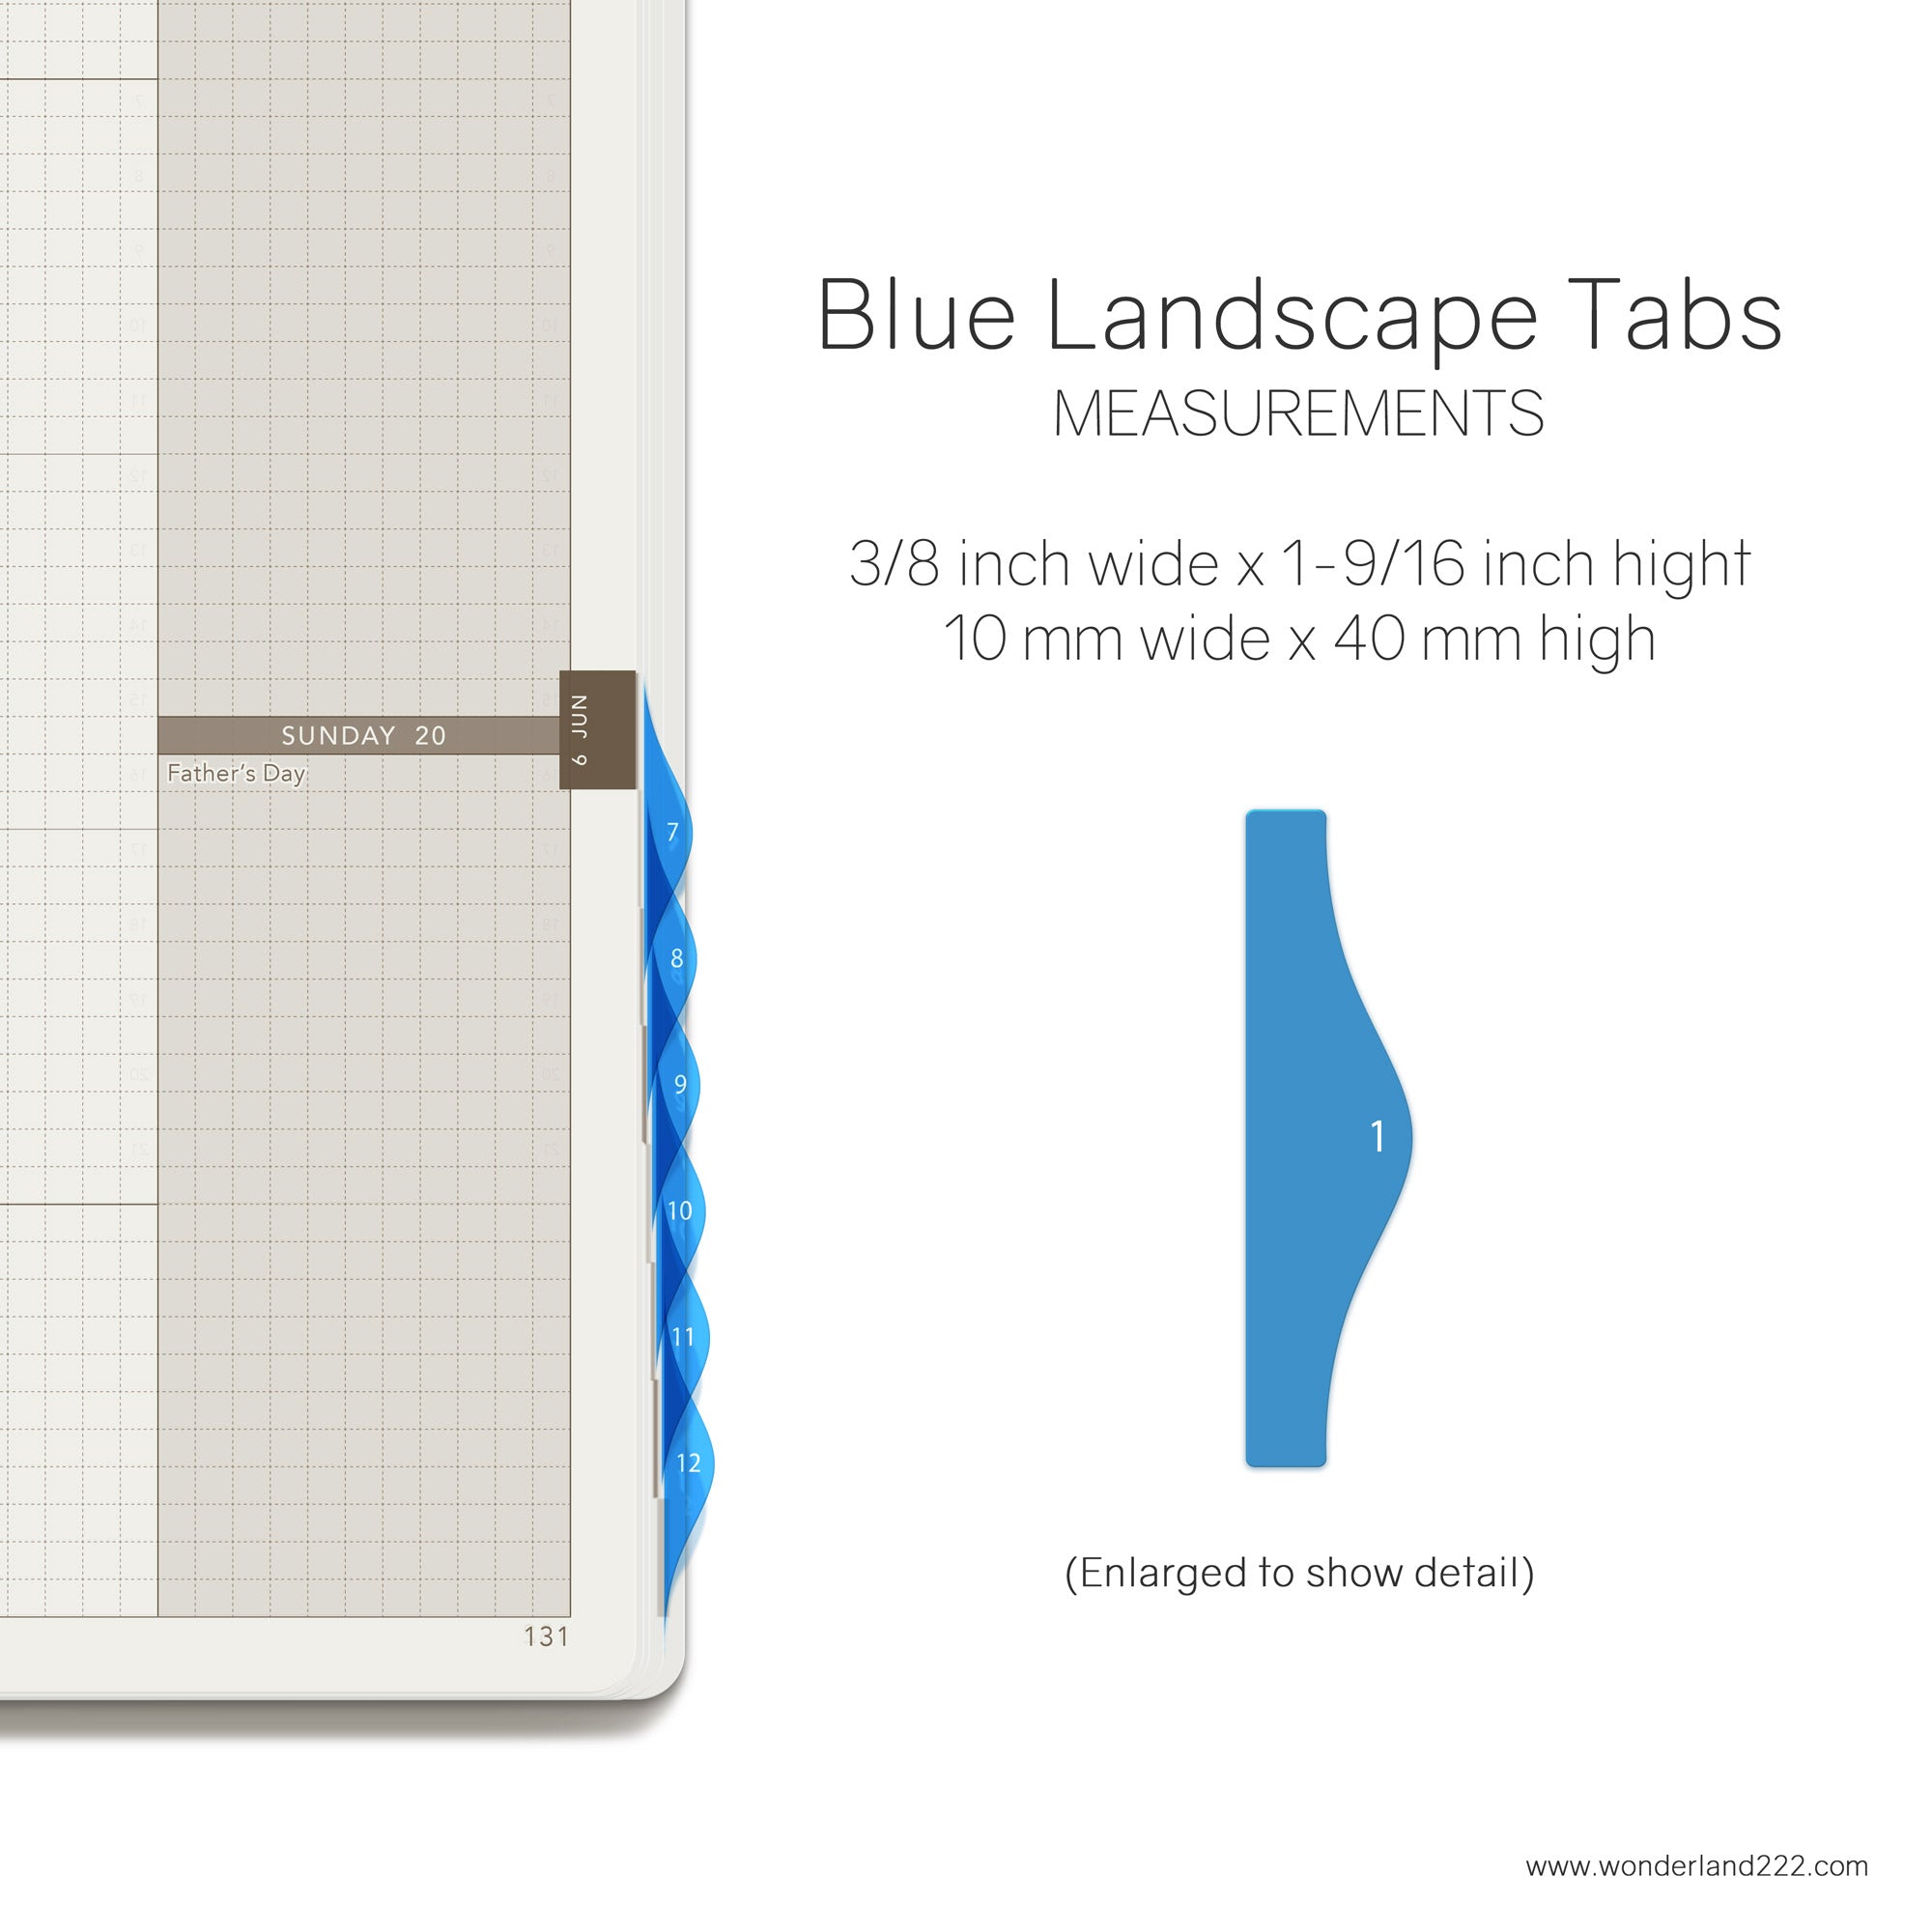 Wonderland 222 Tomoe River Paper Notebooks Planners with HighTide Landscape Monthly Index Tabs Blue Transparent